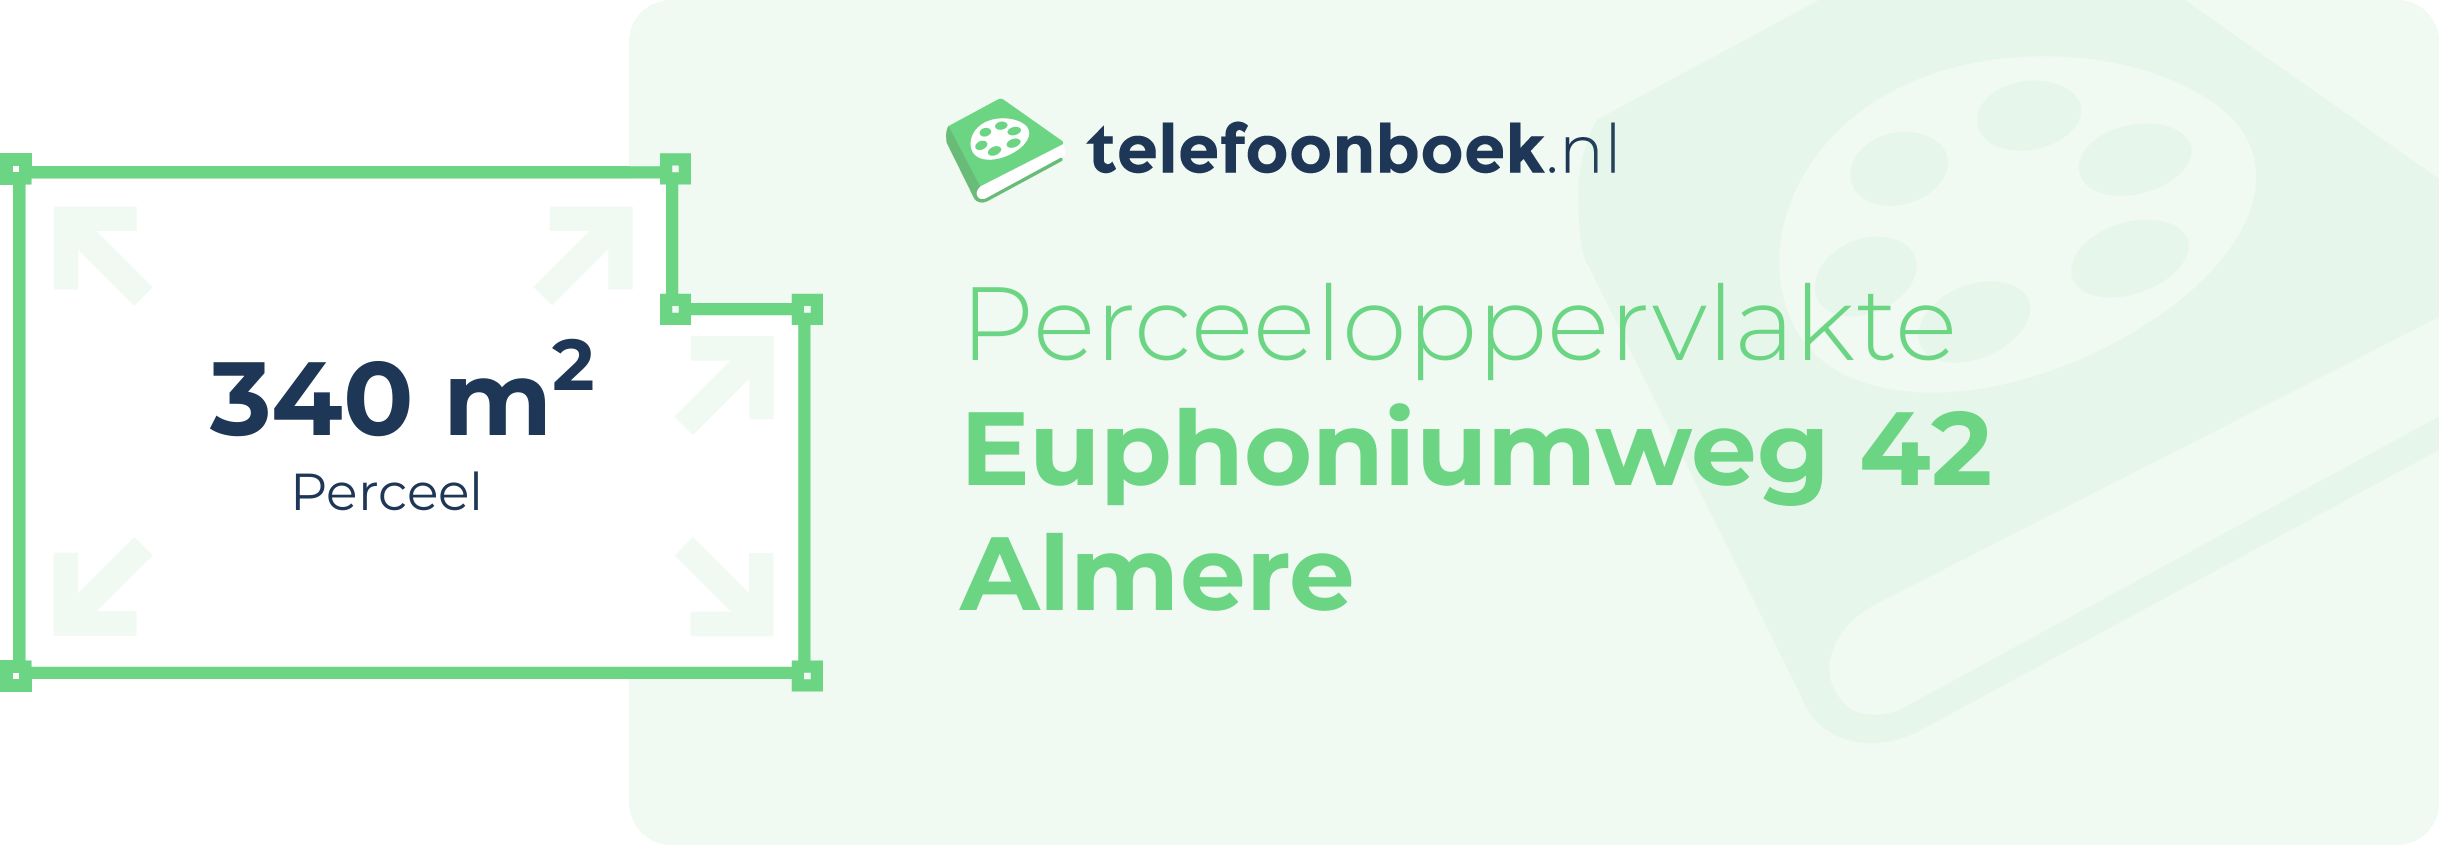 Perceeloppervlakte Euphoniumweg 42 Almere